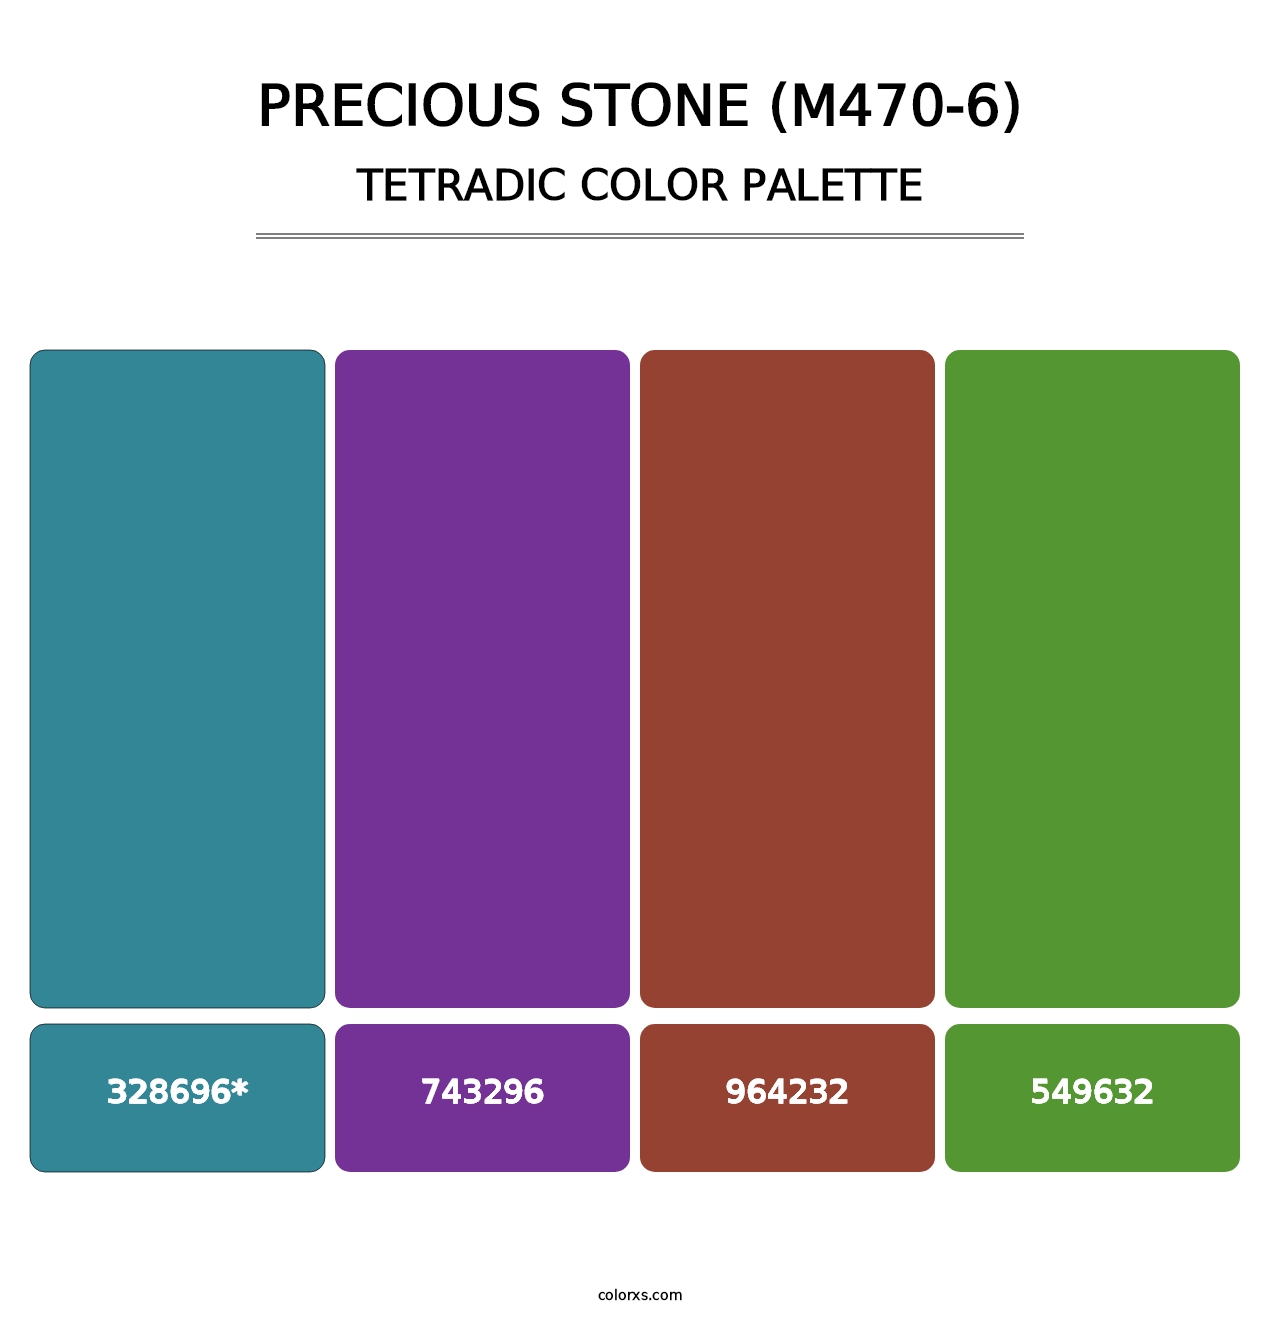 Precious Stone (M470-6) - Tetradic Color Palette